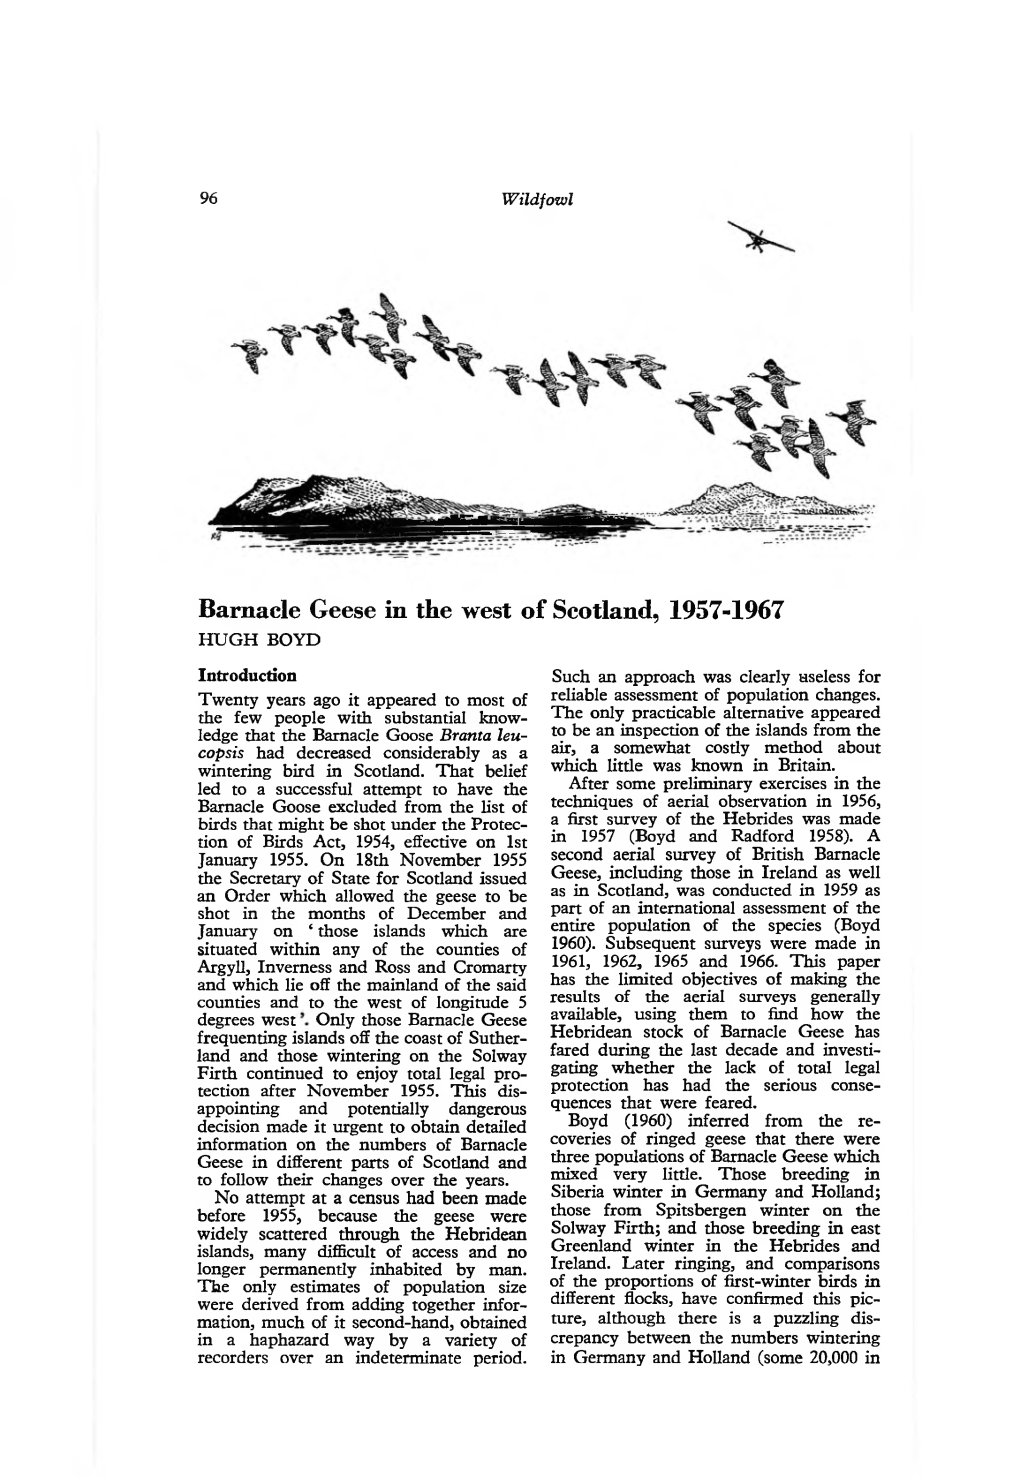 Barnacle Geese in the West of Scotland, 1957-1967 HUGH BOYD